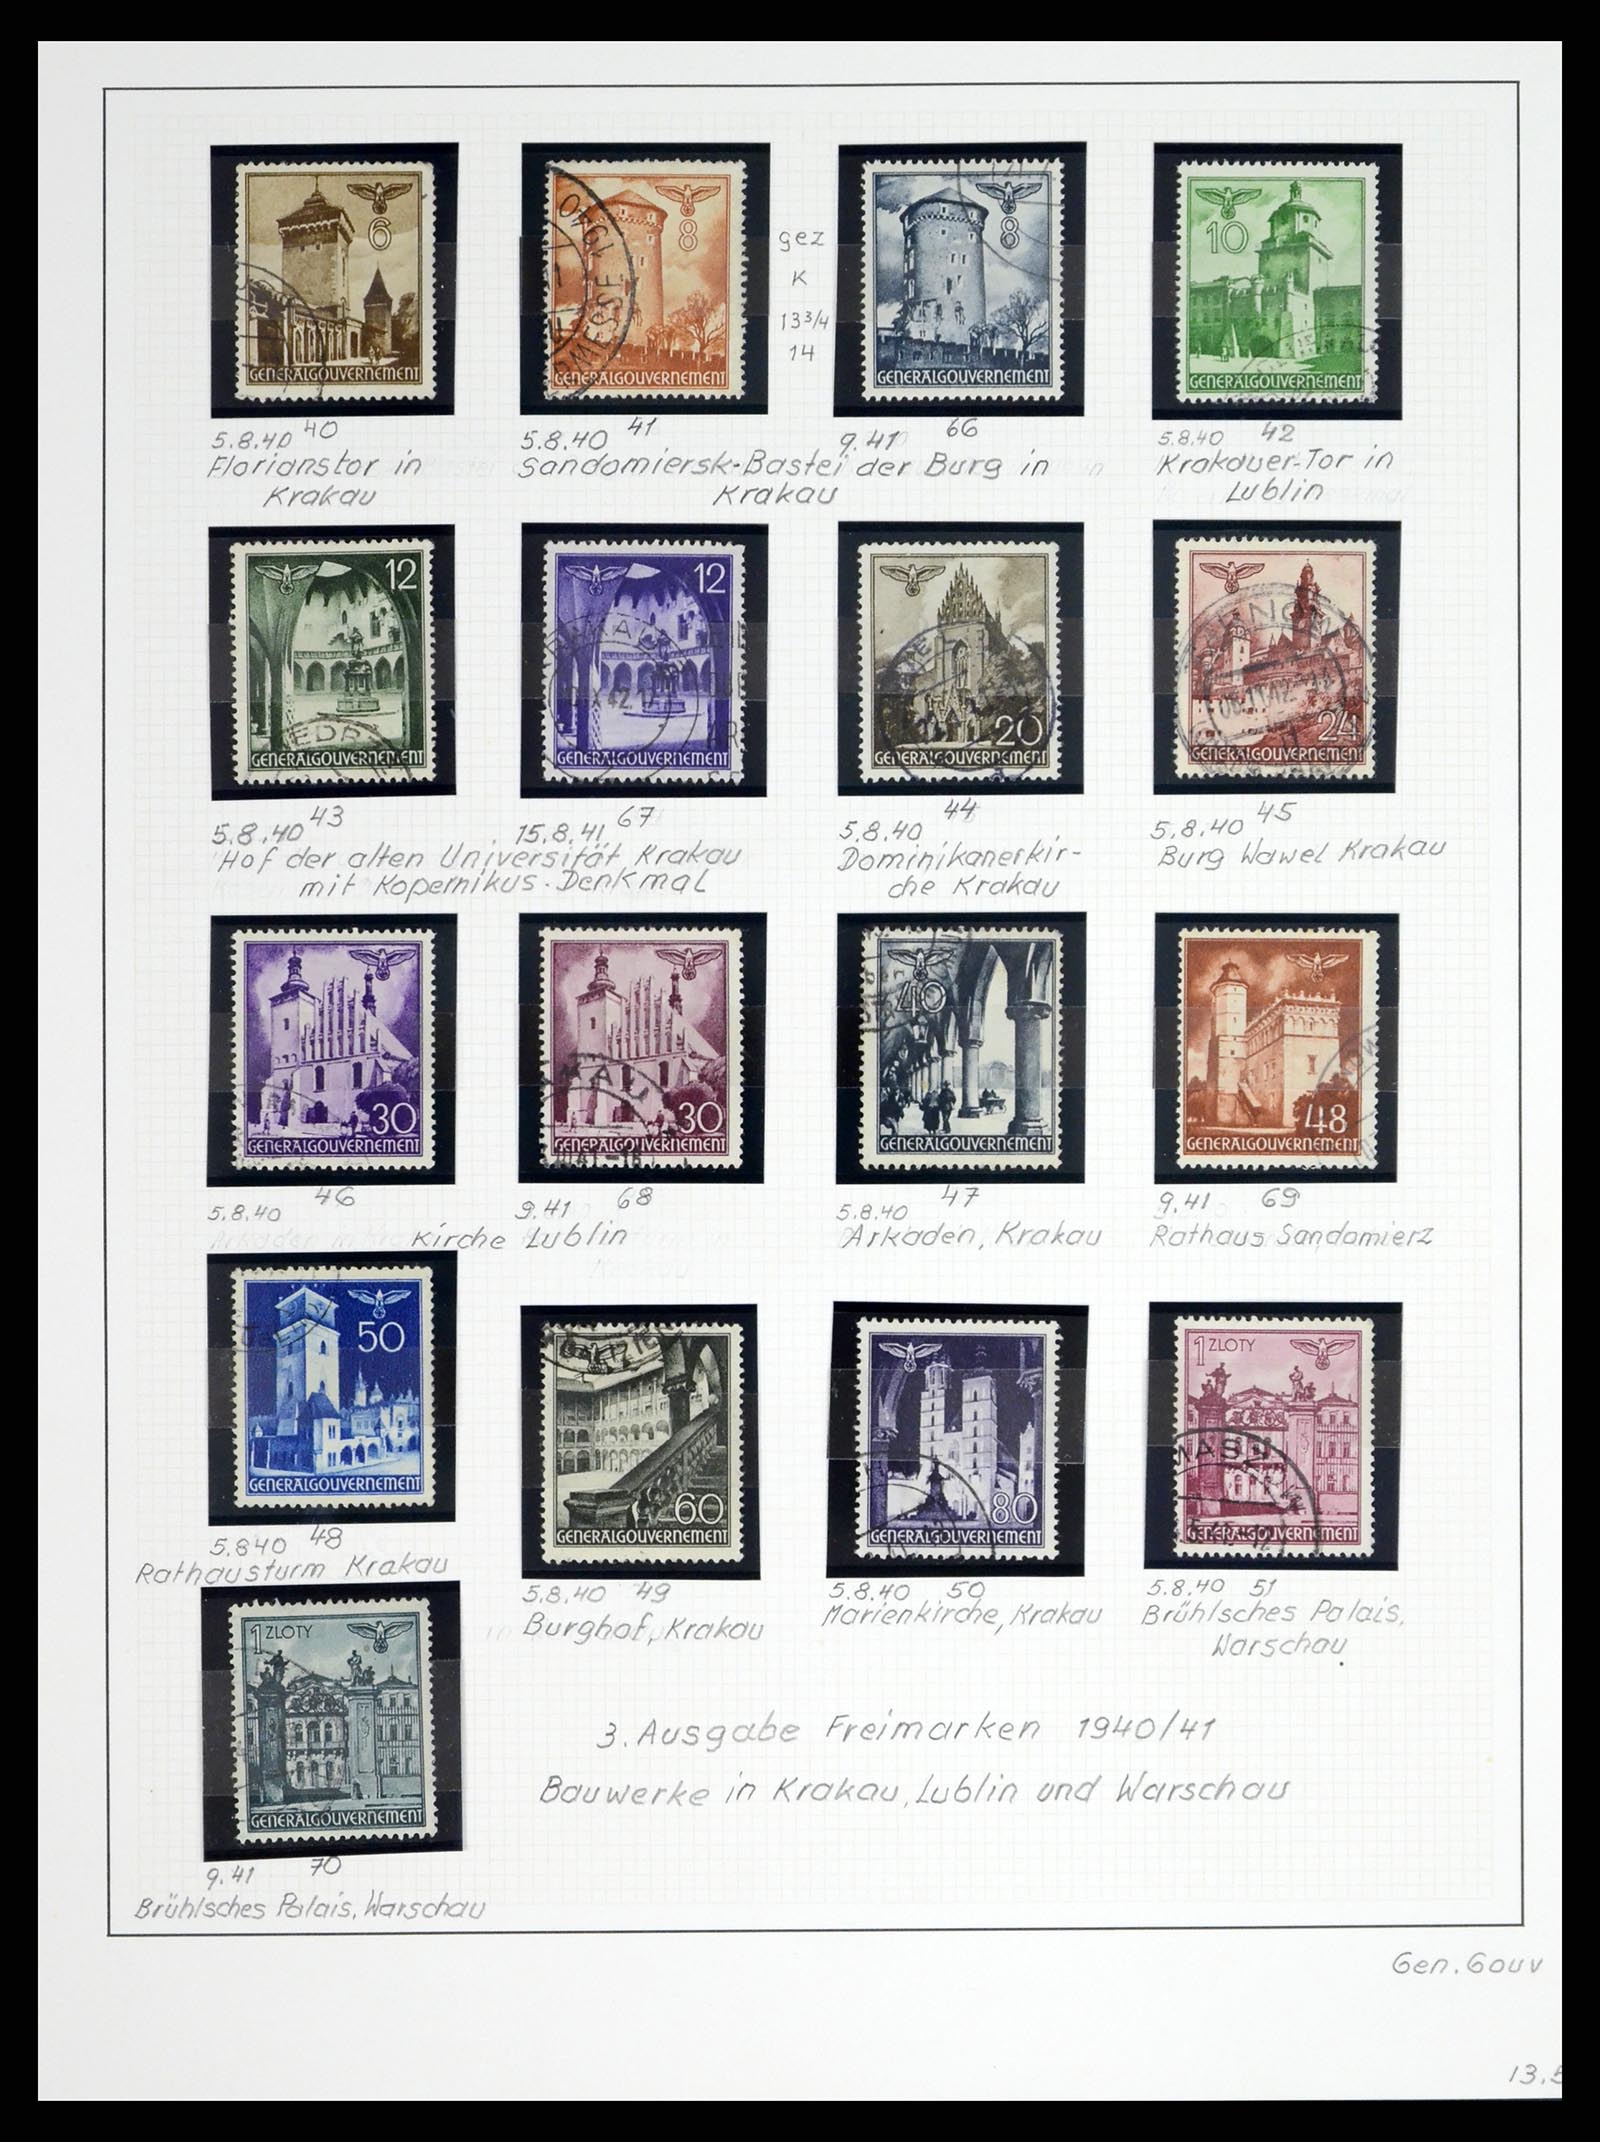 37535 167 - Stamp collection 37535 German occupation second worldwar 1939-1945.